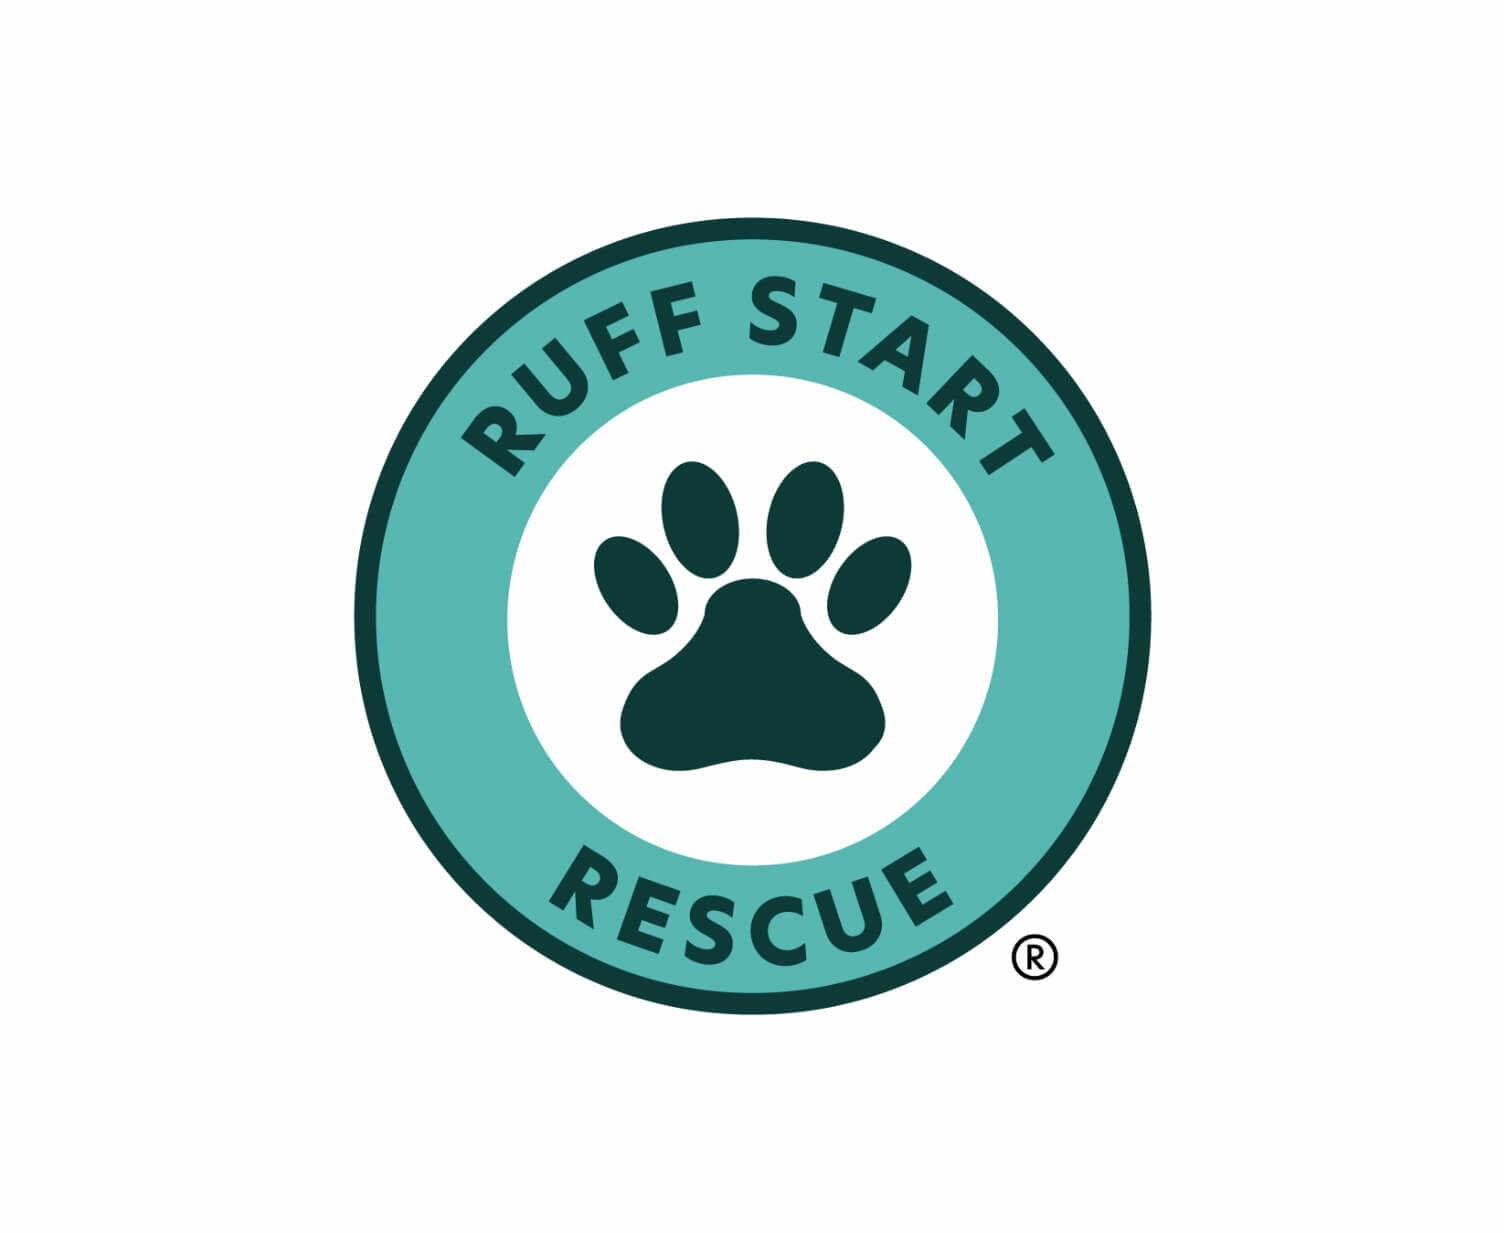 ruff start rescue logo